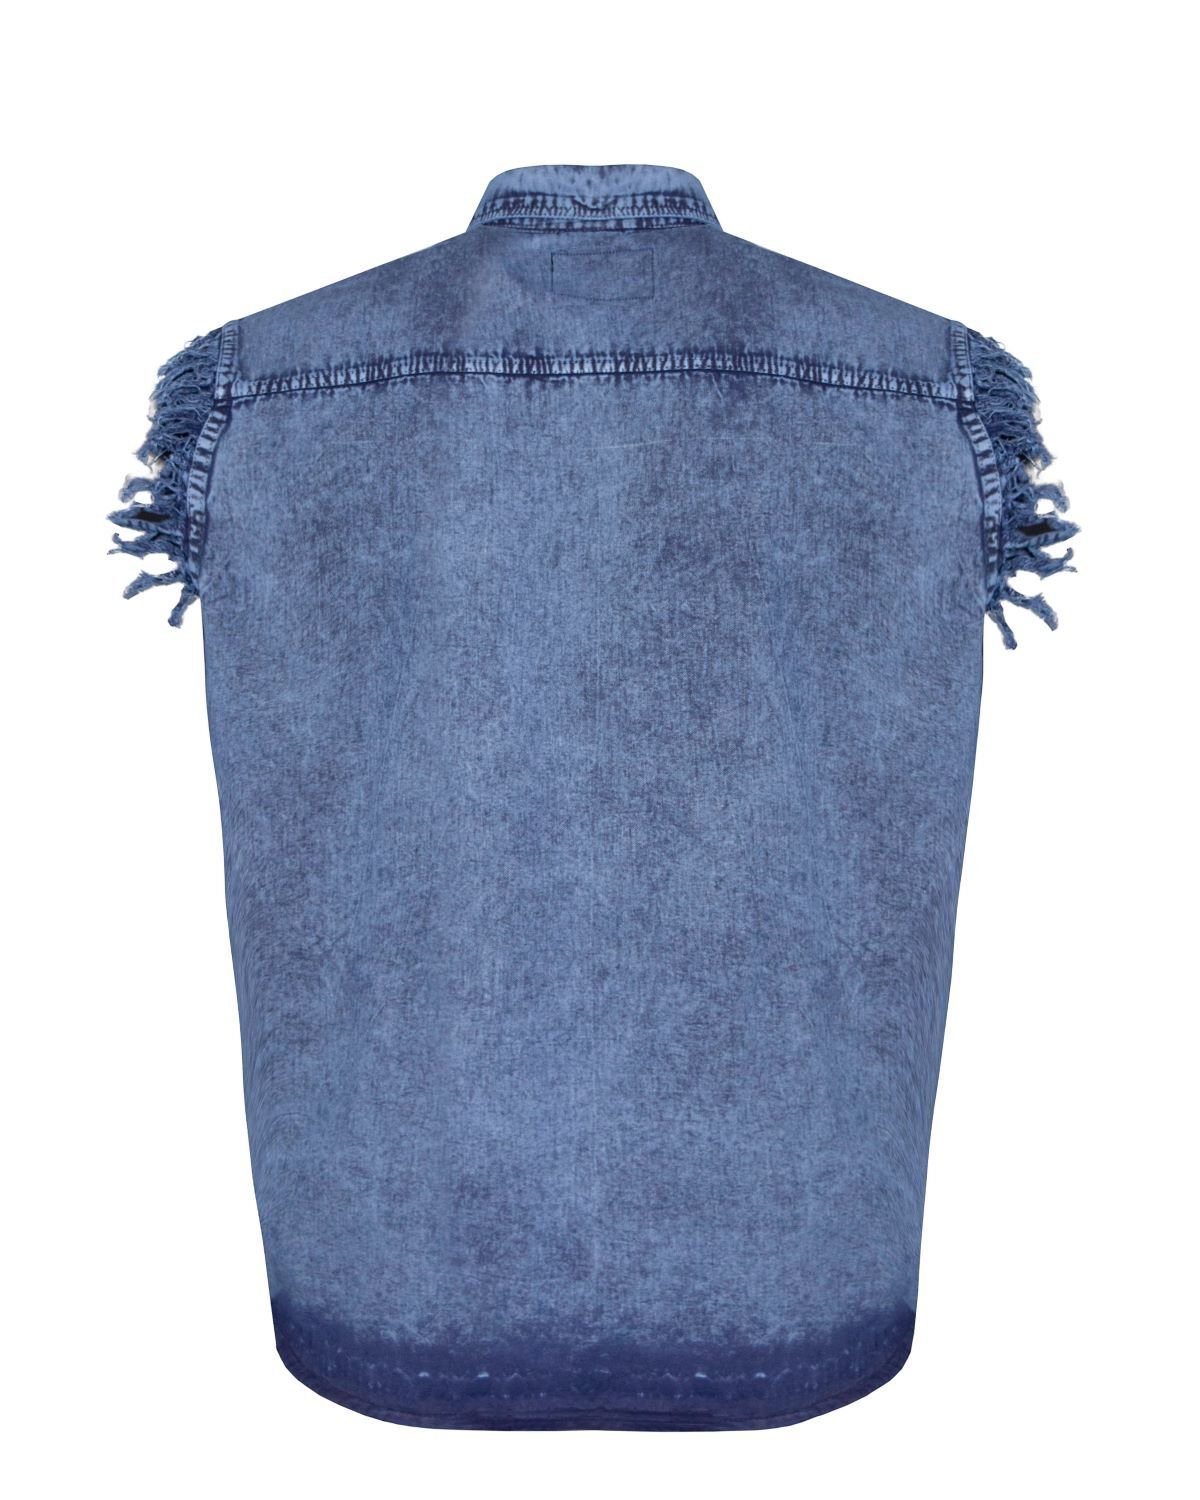 Denim Work Shirt - Men's - Royal Blue - Sleeveless - Flap Pockets - MSLW-R-BLUE-DL